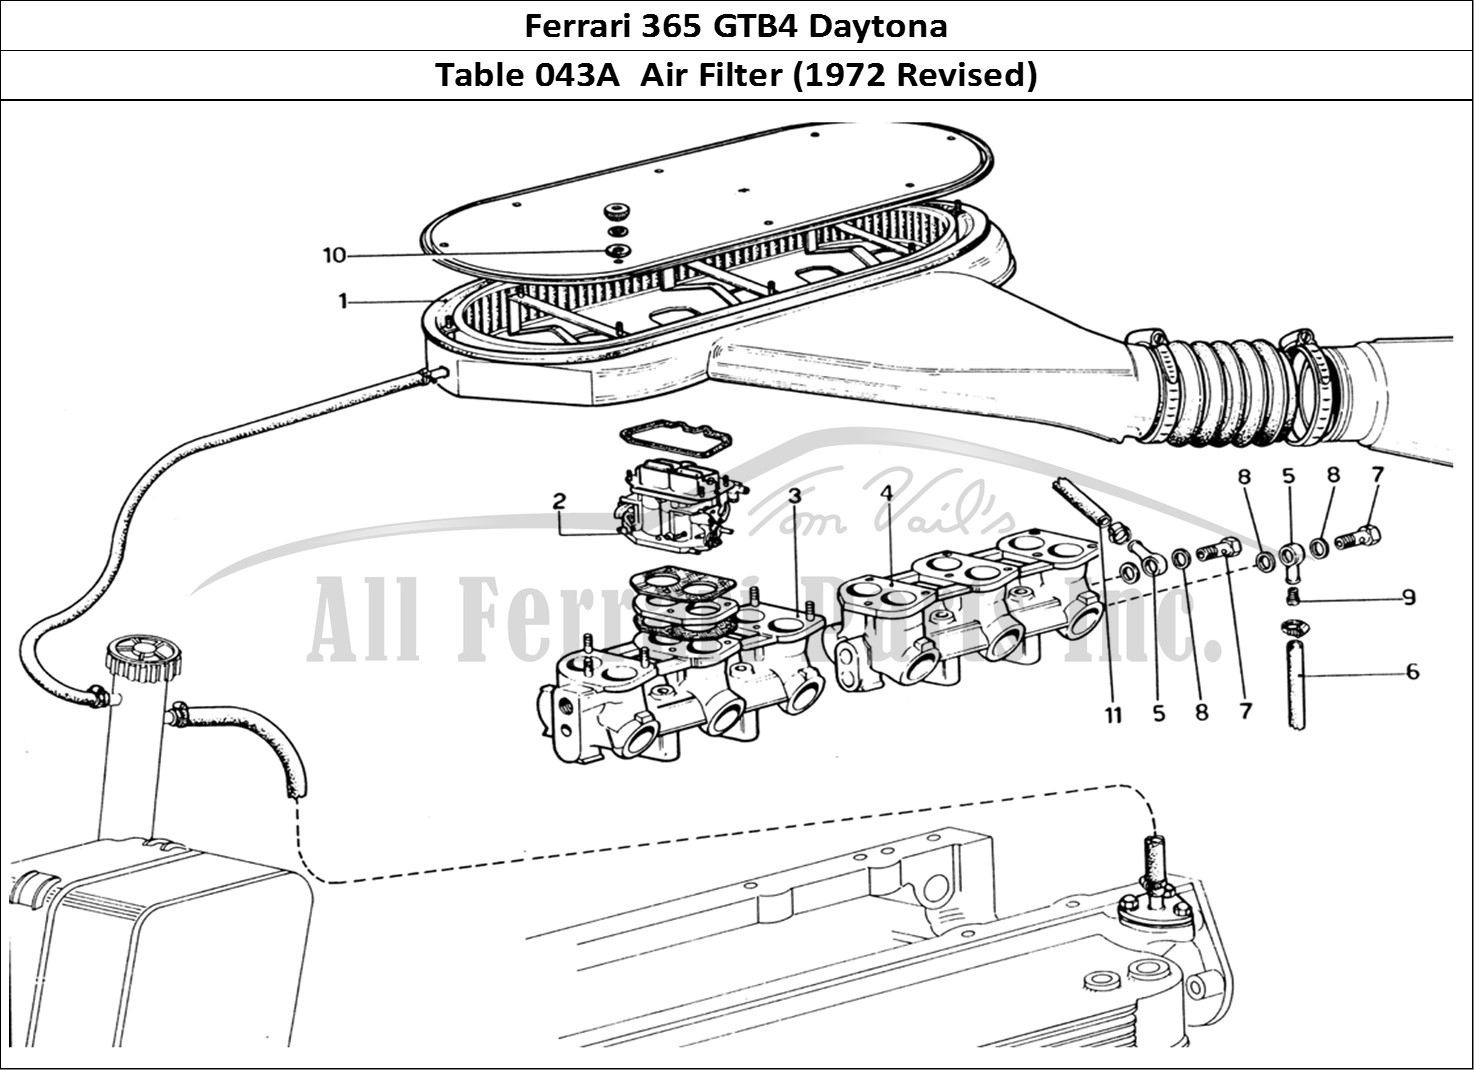 Ferrari Parts Ferrari 365 GTB4 Daytona (1969) Page 043 Air Filter (1972 Revision